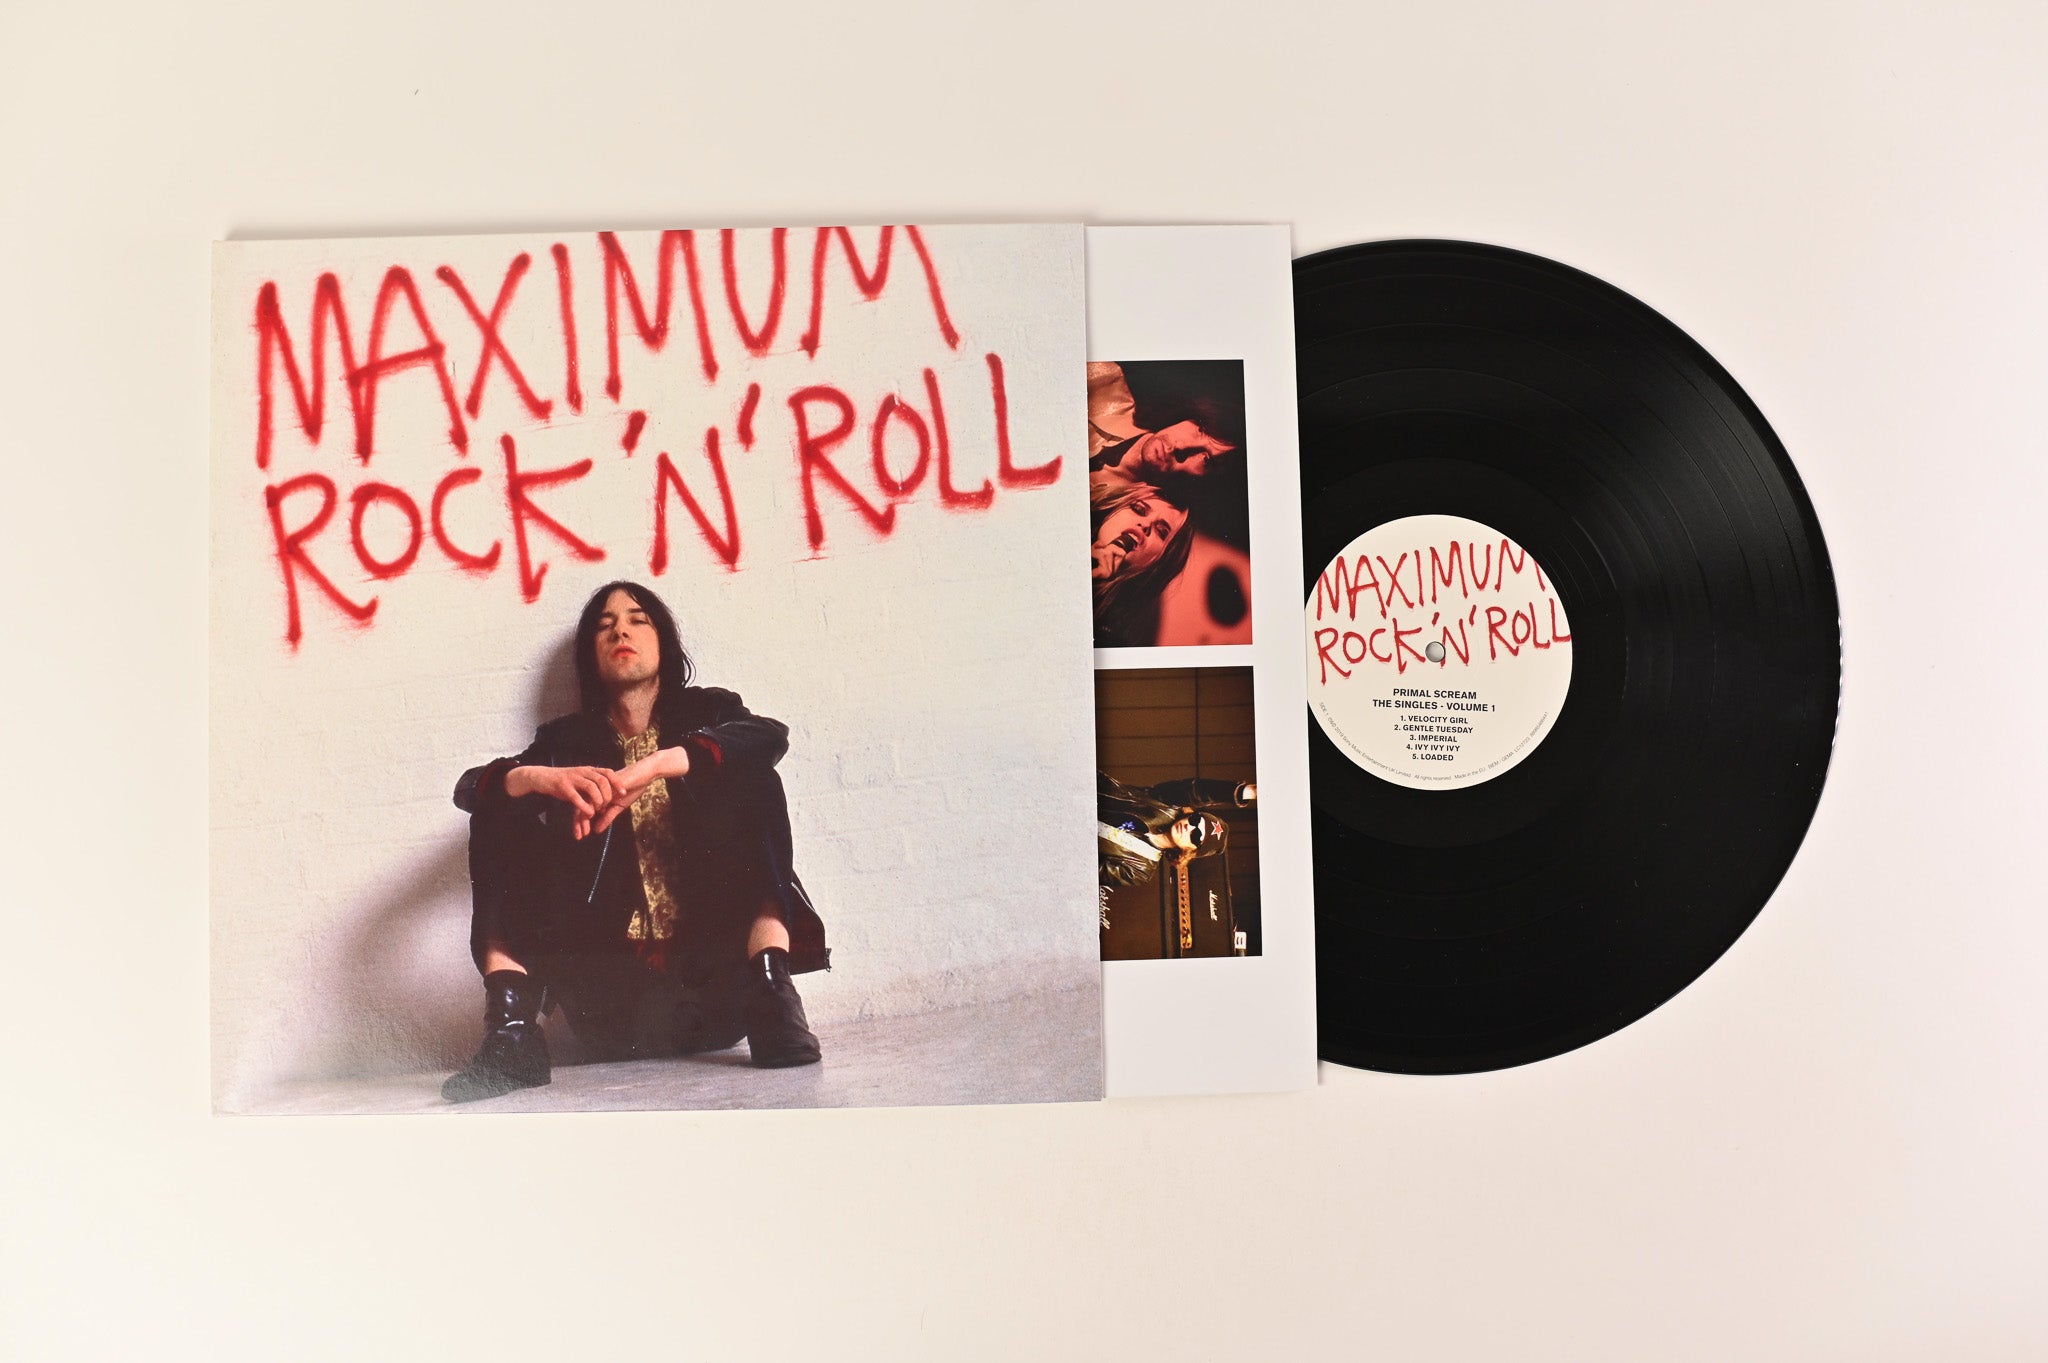 Primal Scream - Maximum Rock 'N' Roll (The Singles Volume 1) on Sony